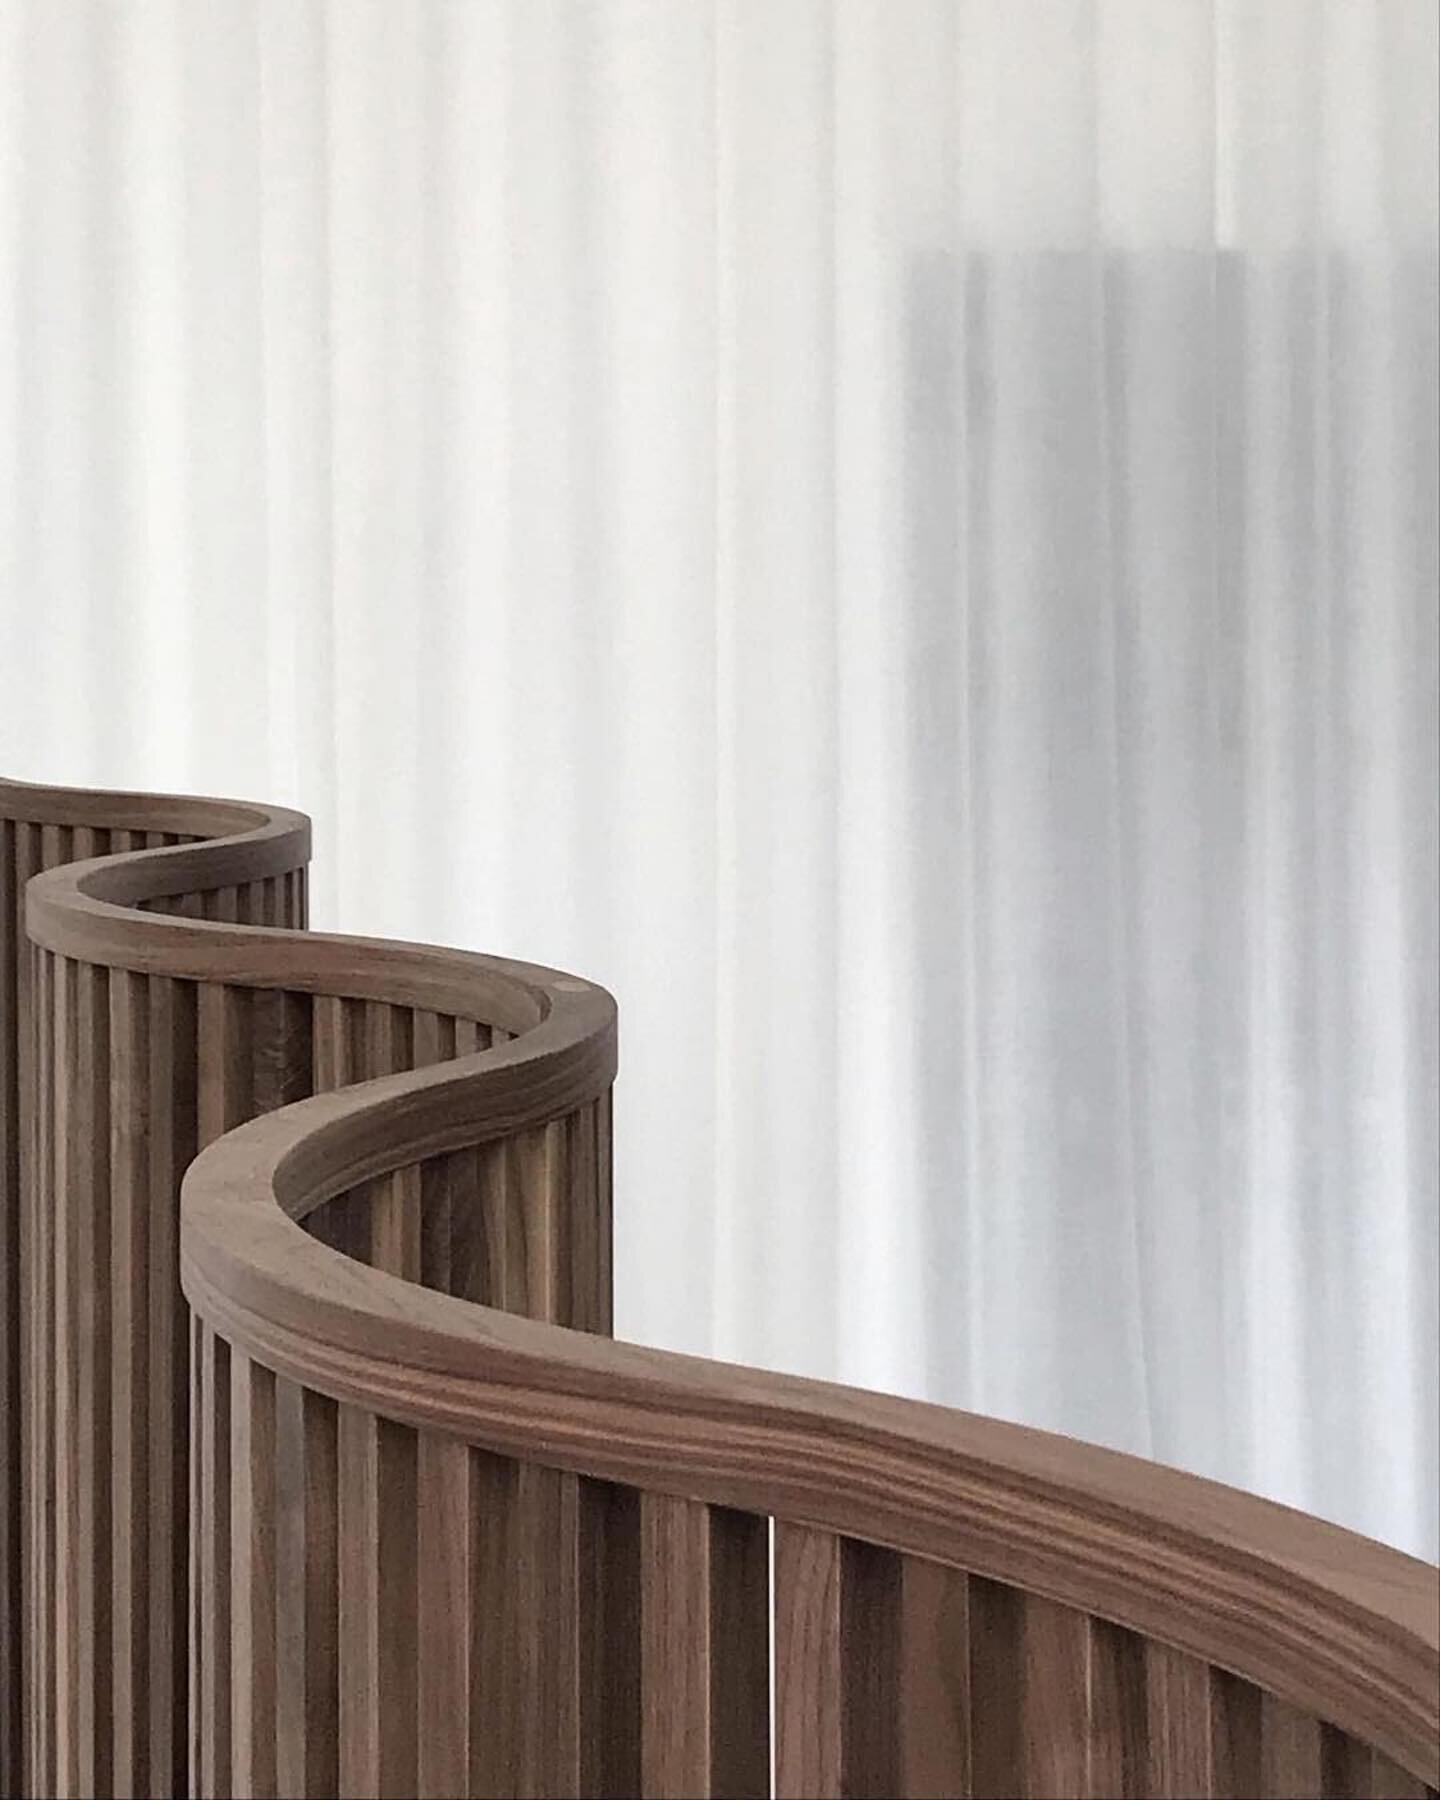 Curves @grandrelations 
📸: @liljencrantzdesign via @mrlefvander #architecturaldetails #lessismore